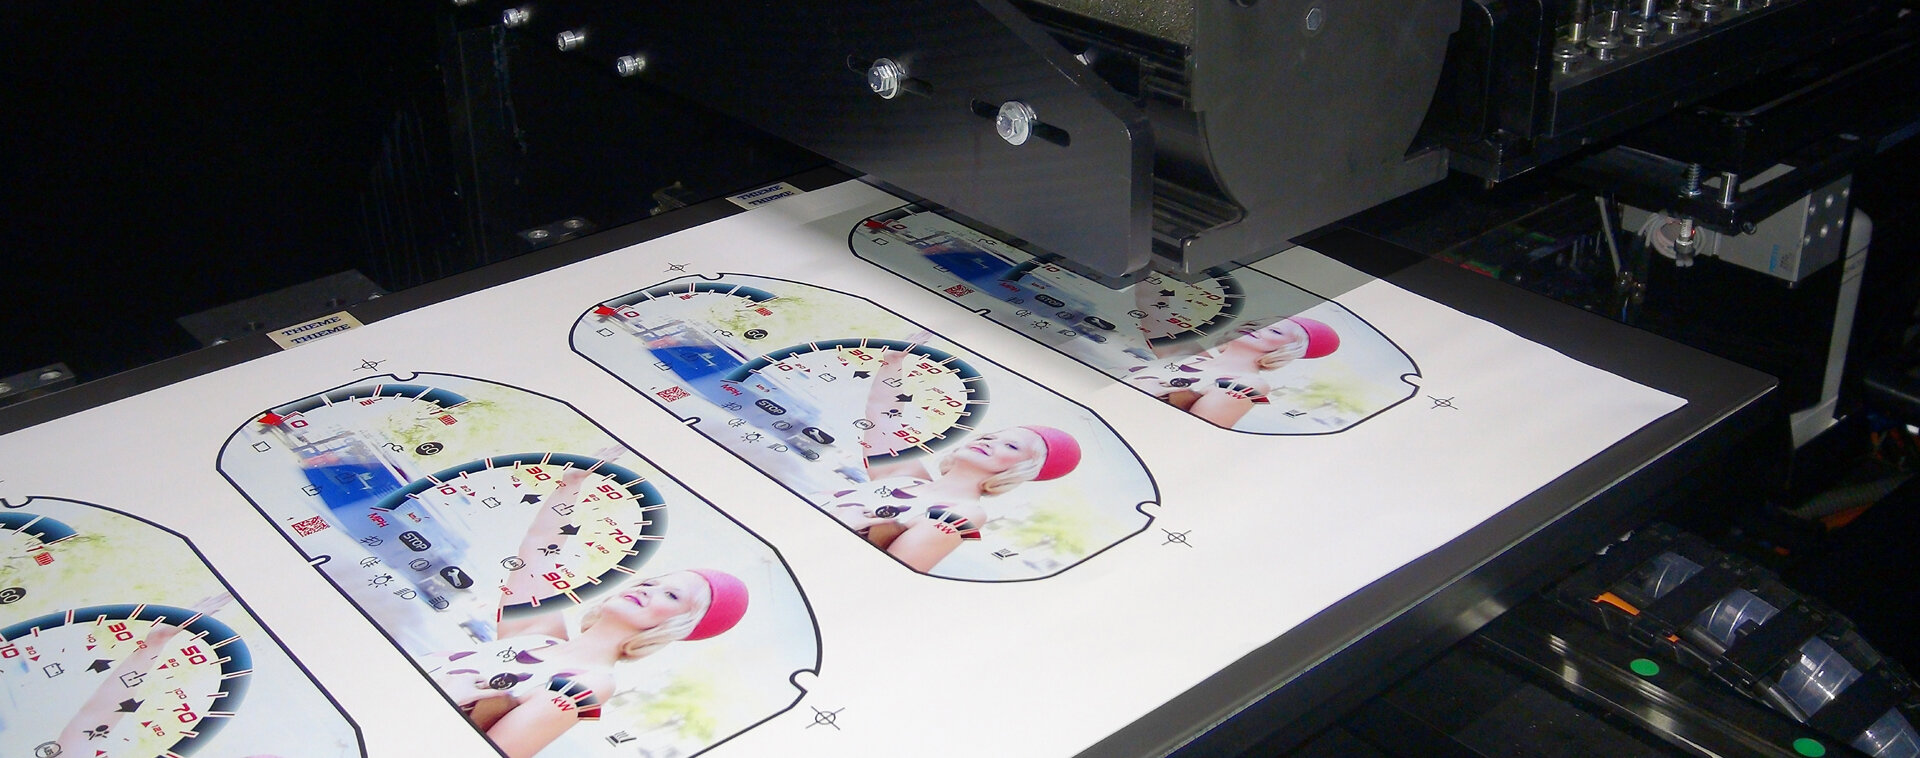 Digital printing - application on a machine